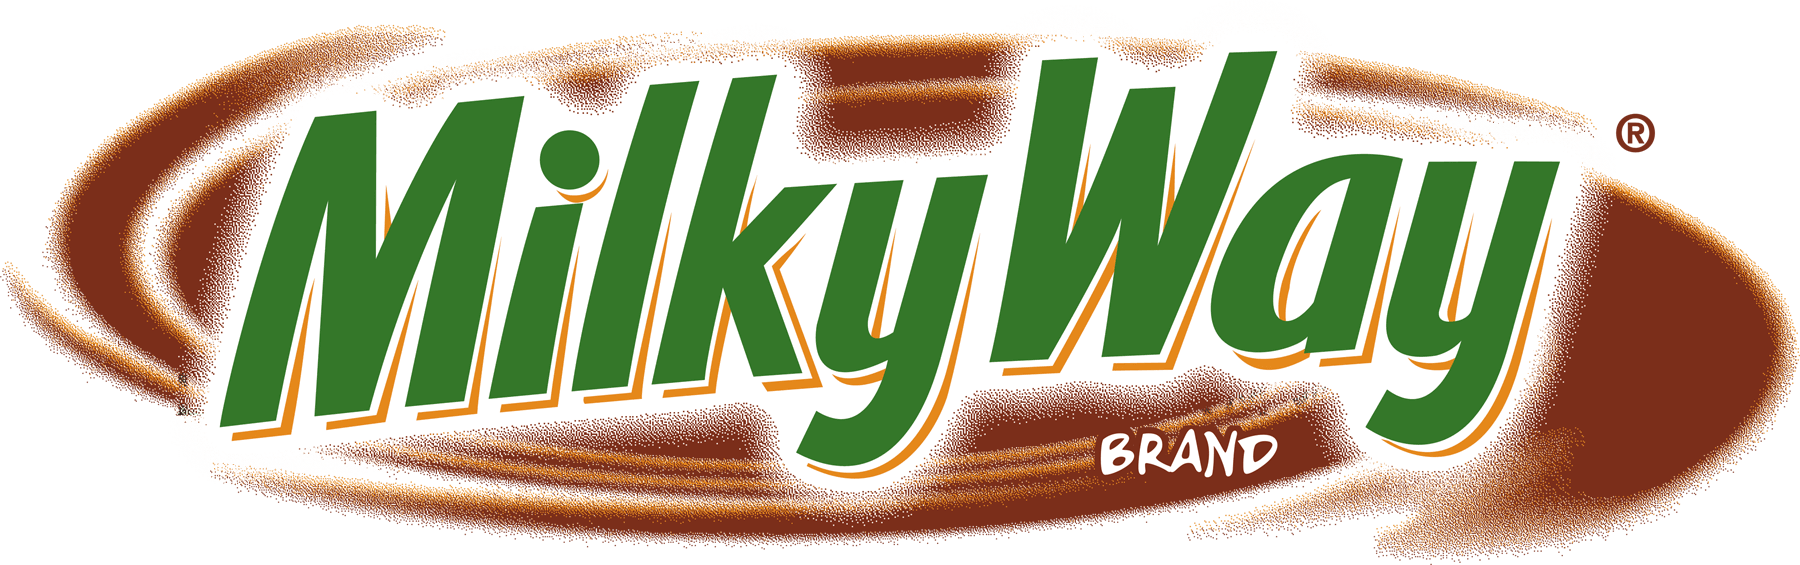 Milky Way Clipart Candy Bar - Milky Way Candy Bar (1800x565)